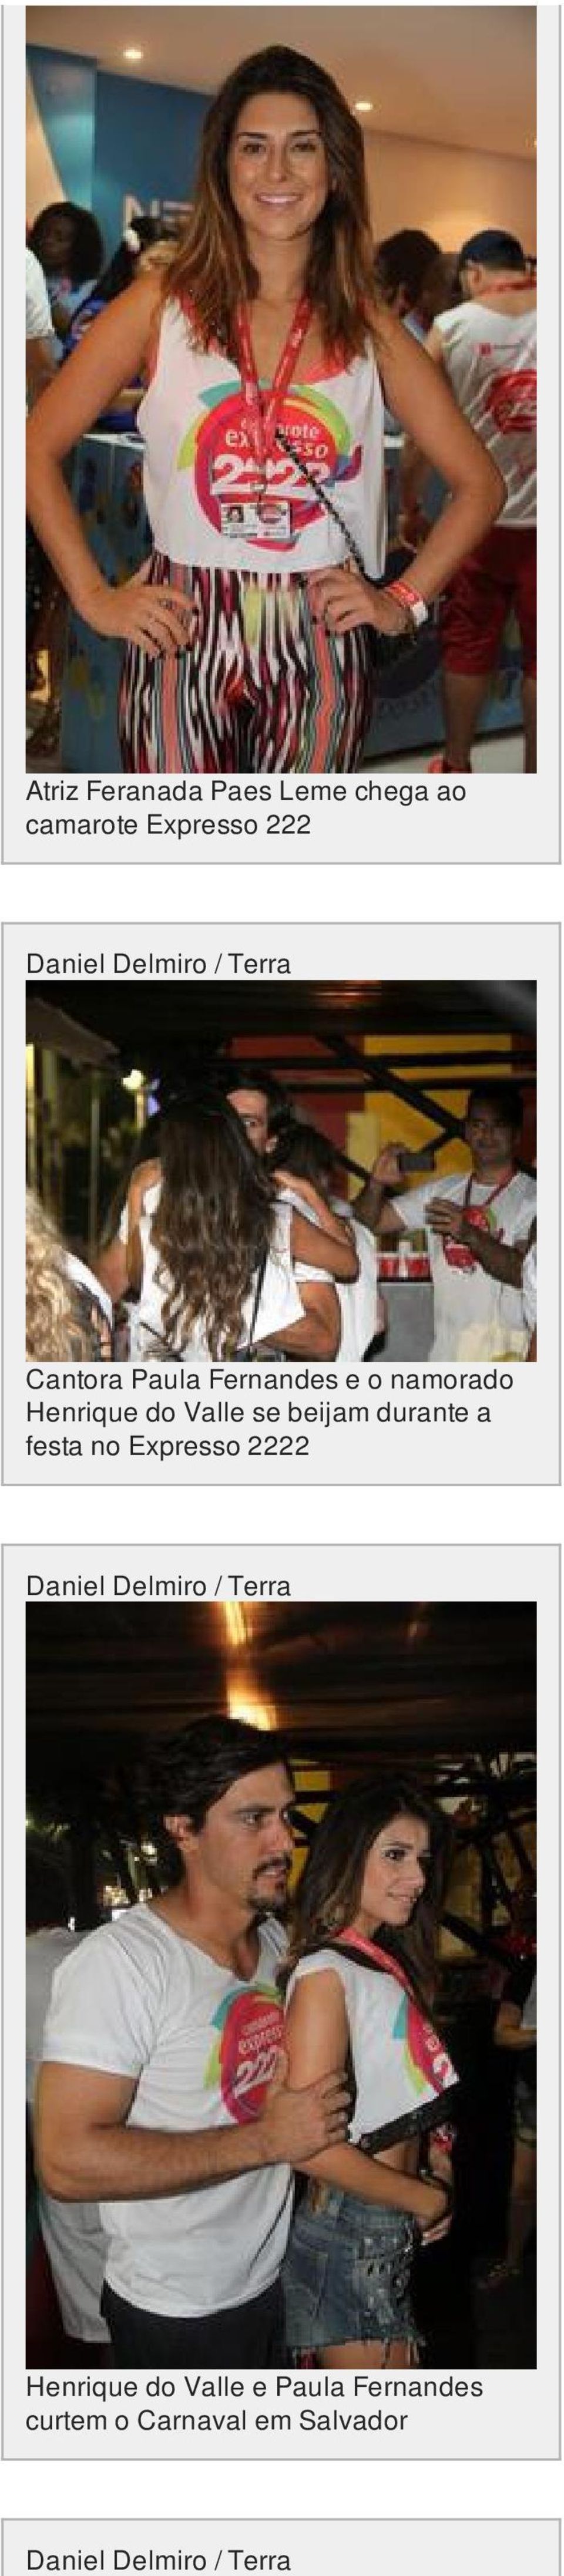 beijam durante a festa no Expresso 2222 Daniel Delmiro / Terra Henrique